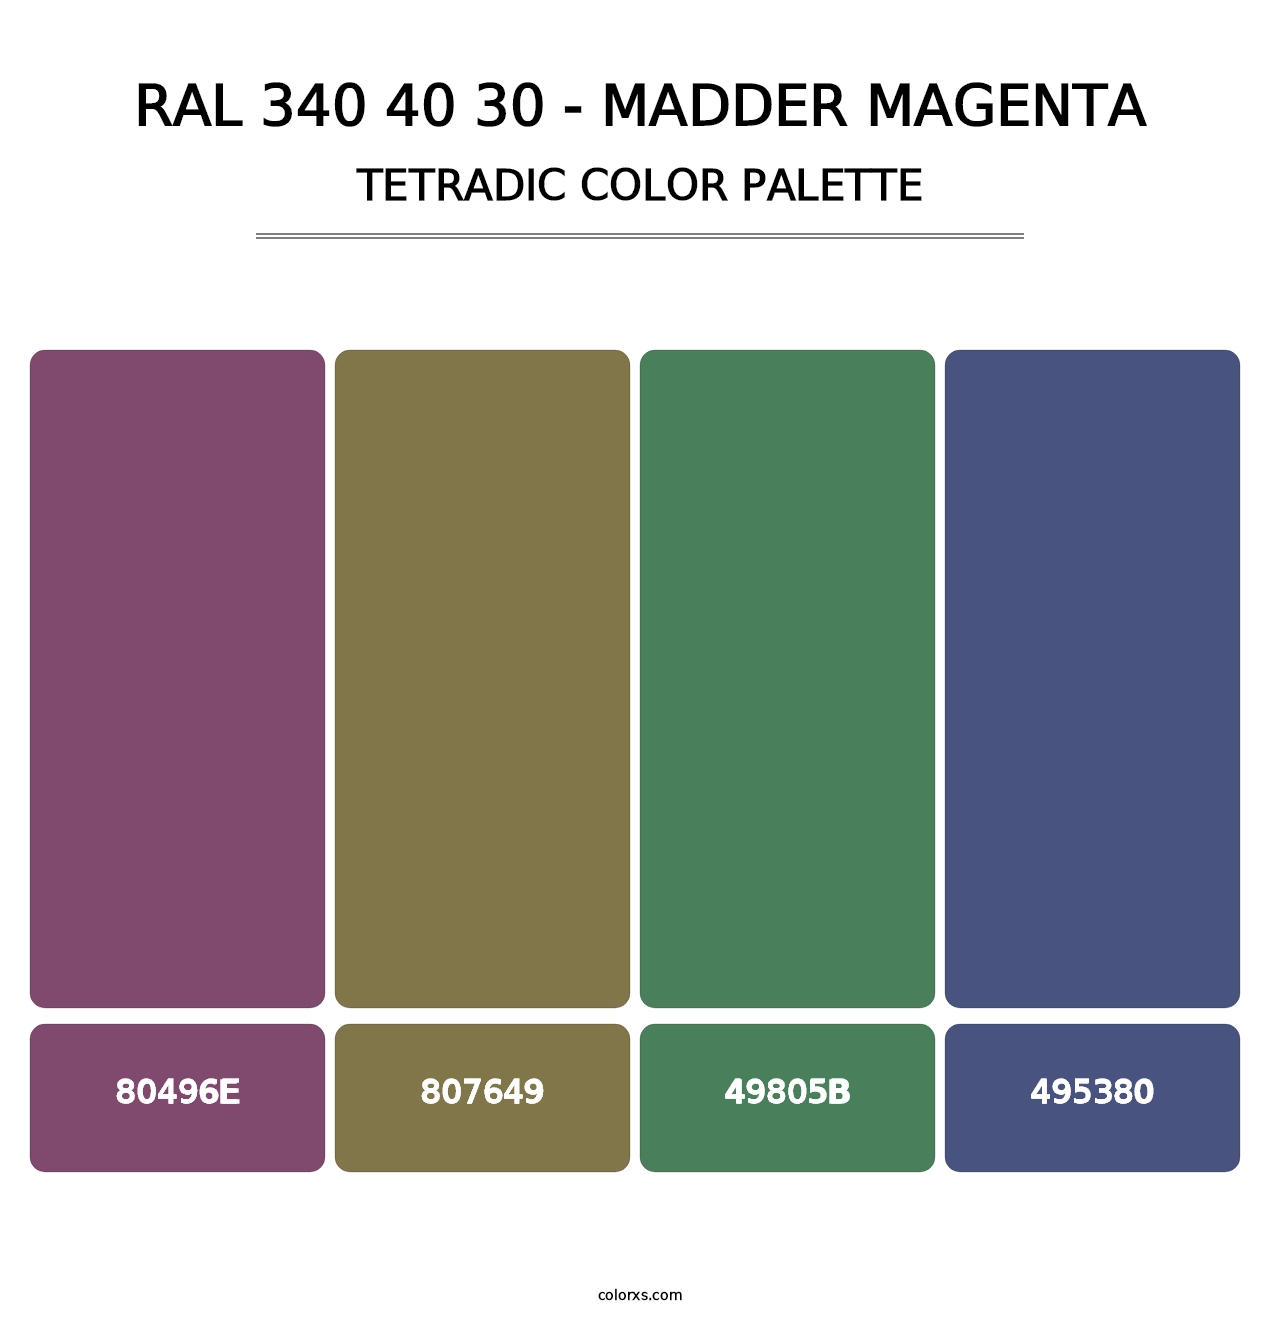 RAL 340 40 30 - Madder Magenta - Tetradic Color Palette